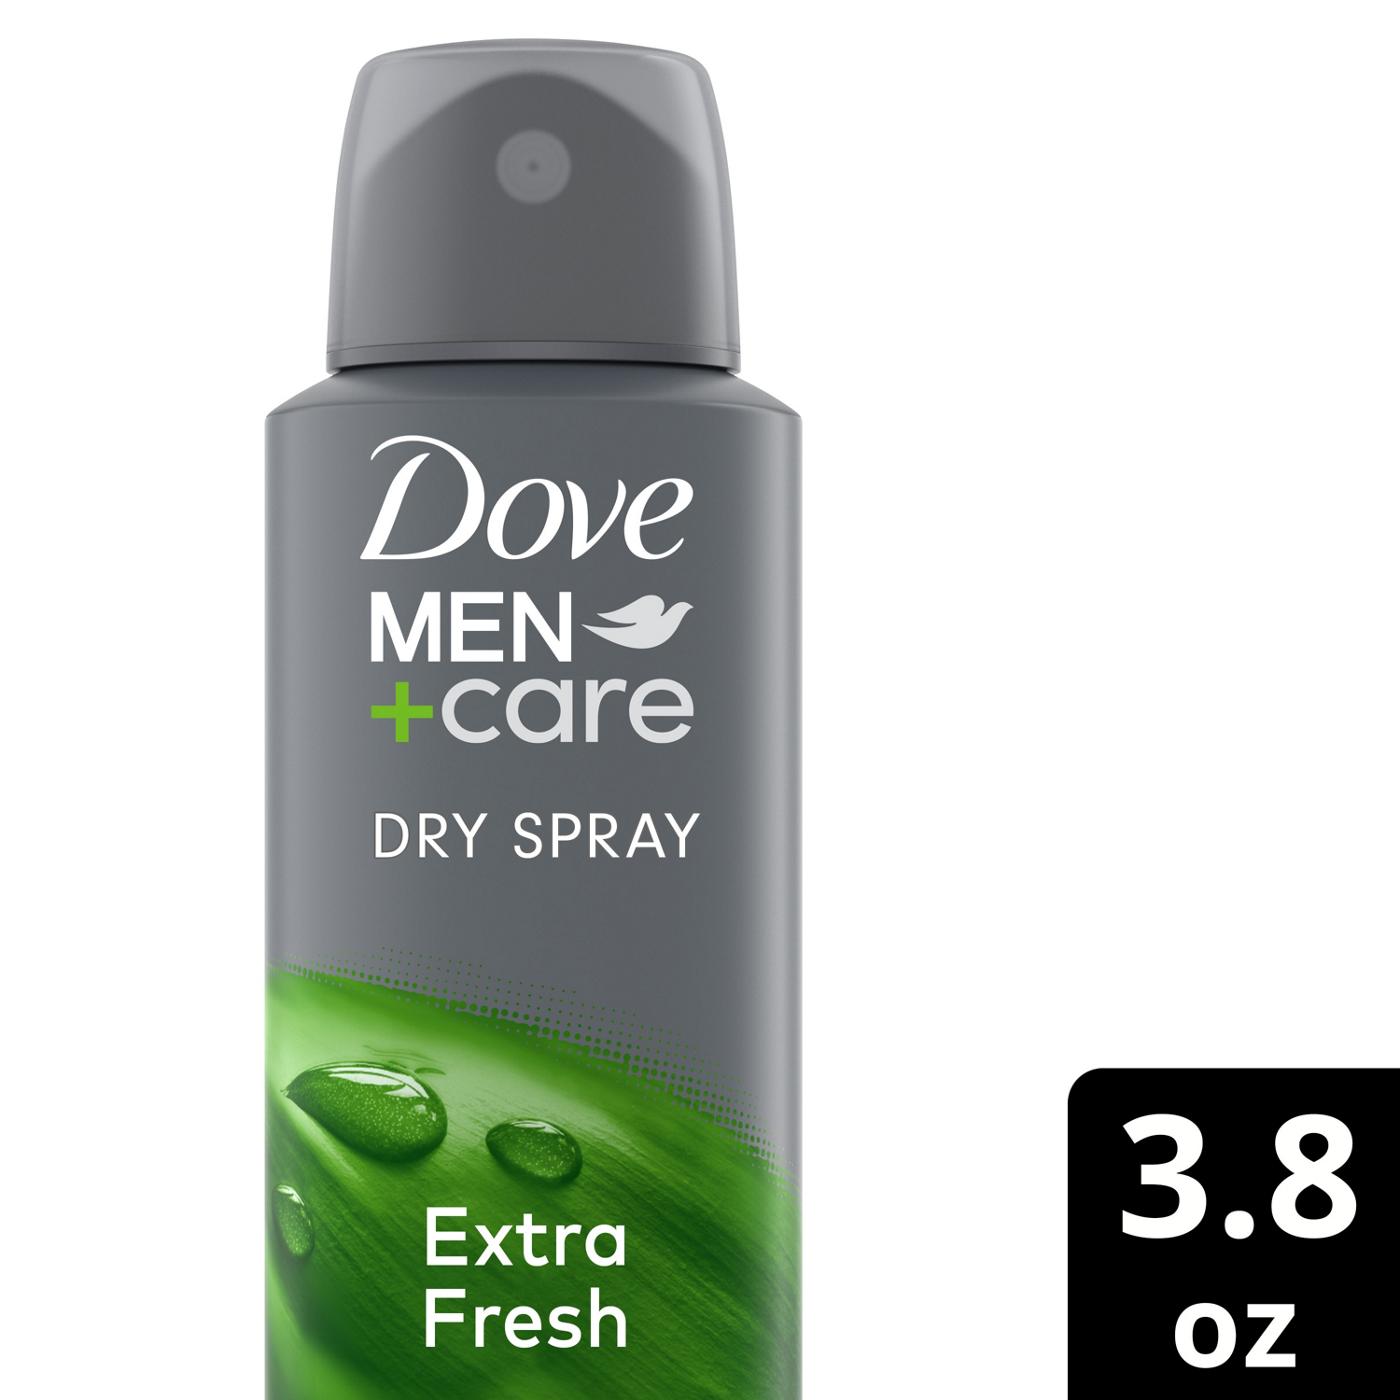 Dove Men+Care Antiperspirant Deodorant Dry Spray - Extra Fresh; image 2 of 6